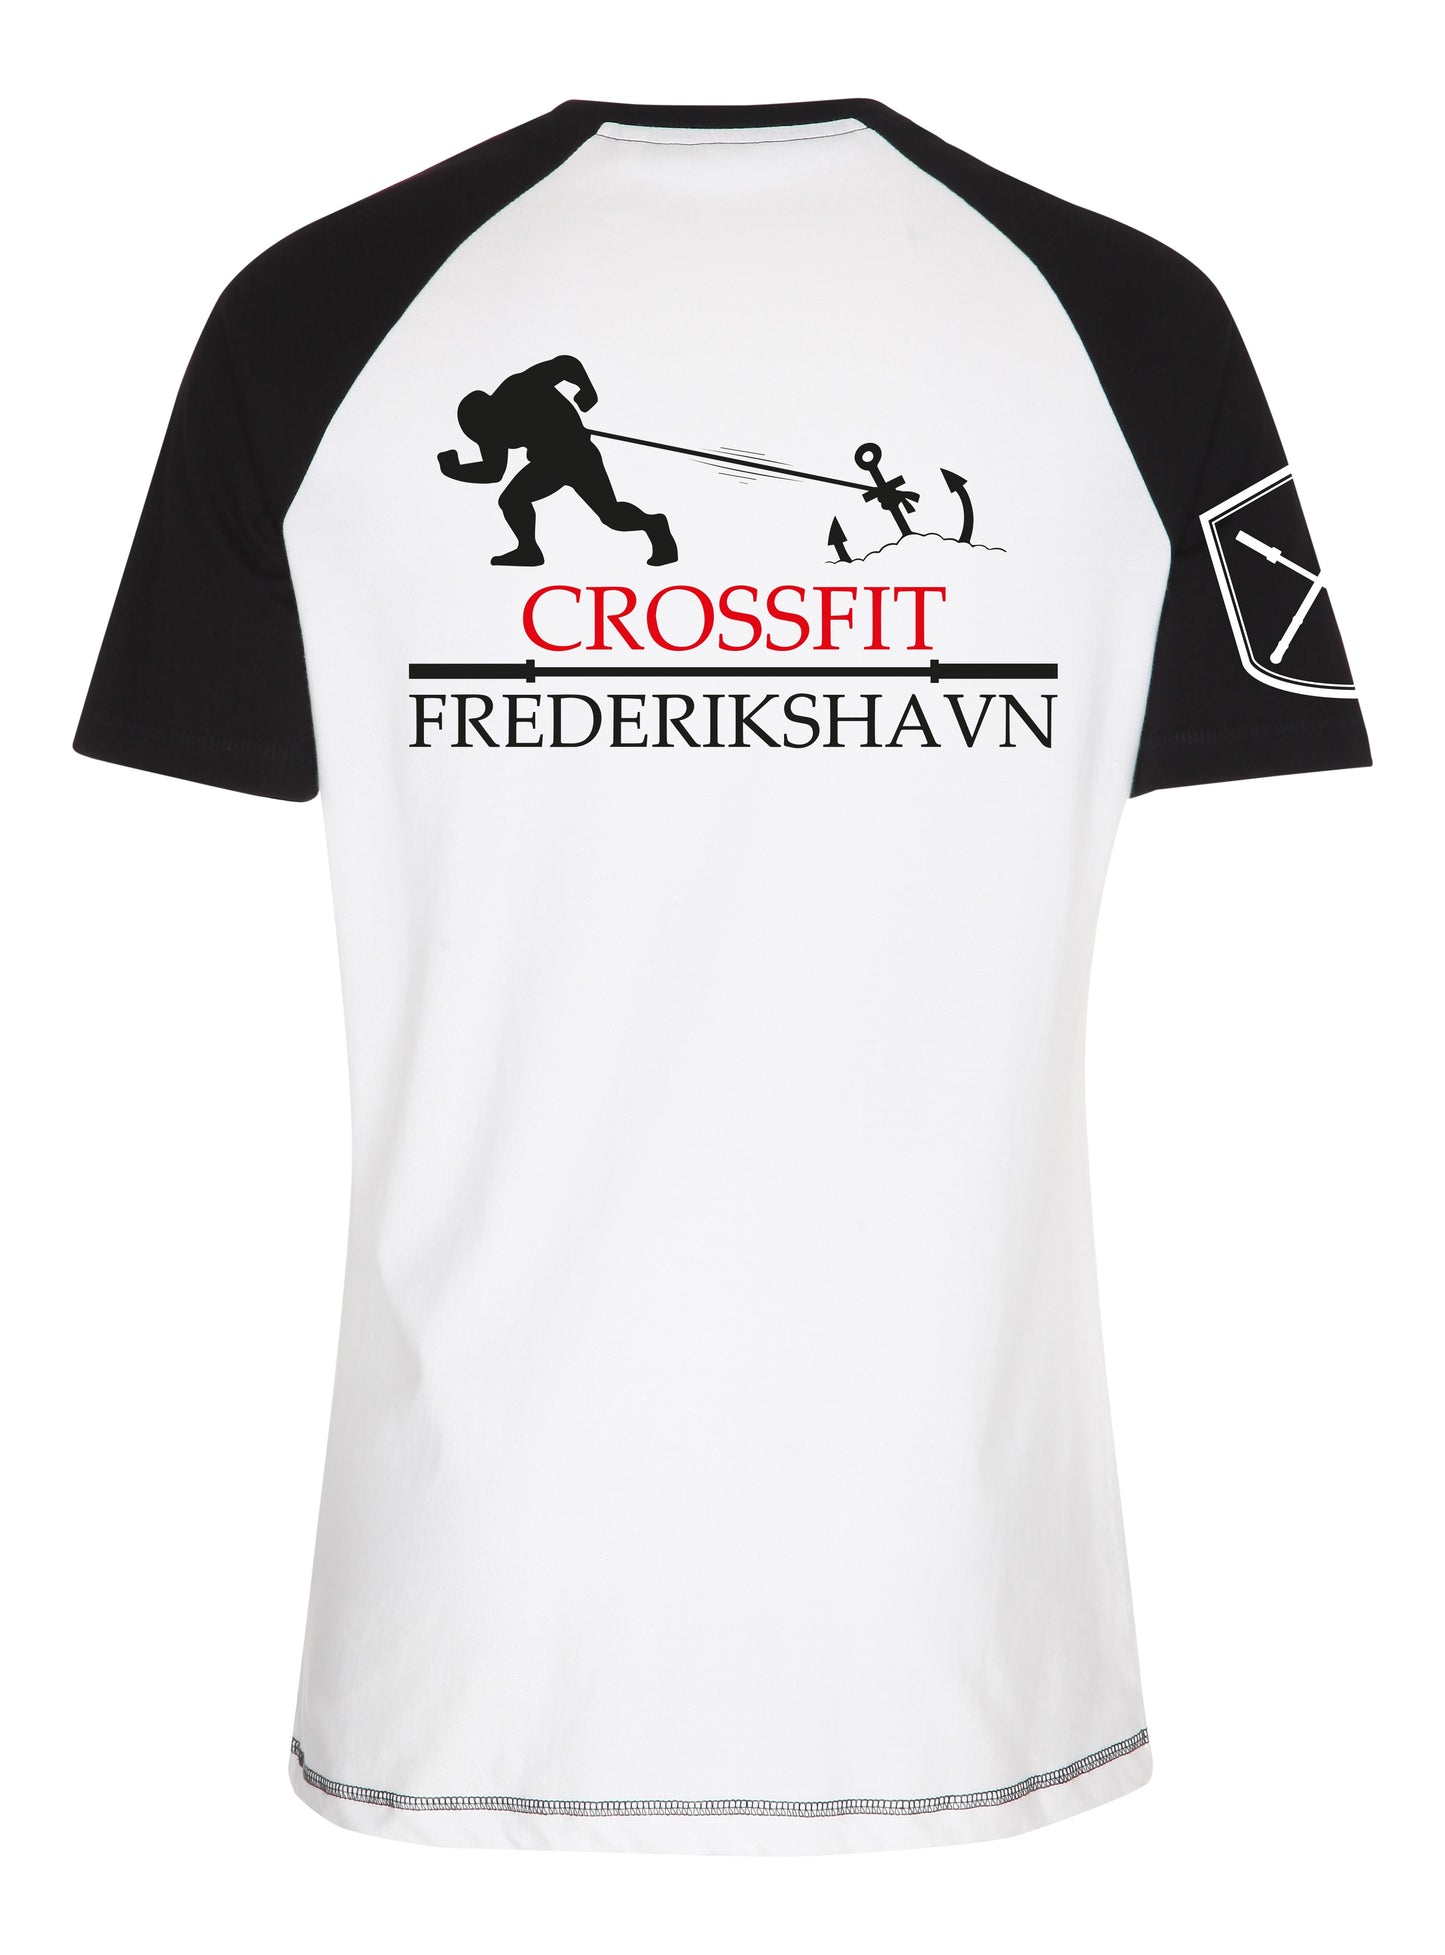 Crossfit Frederikshavn - Unisex Raglan t-shirt